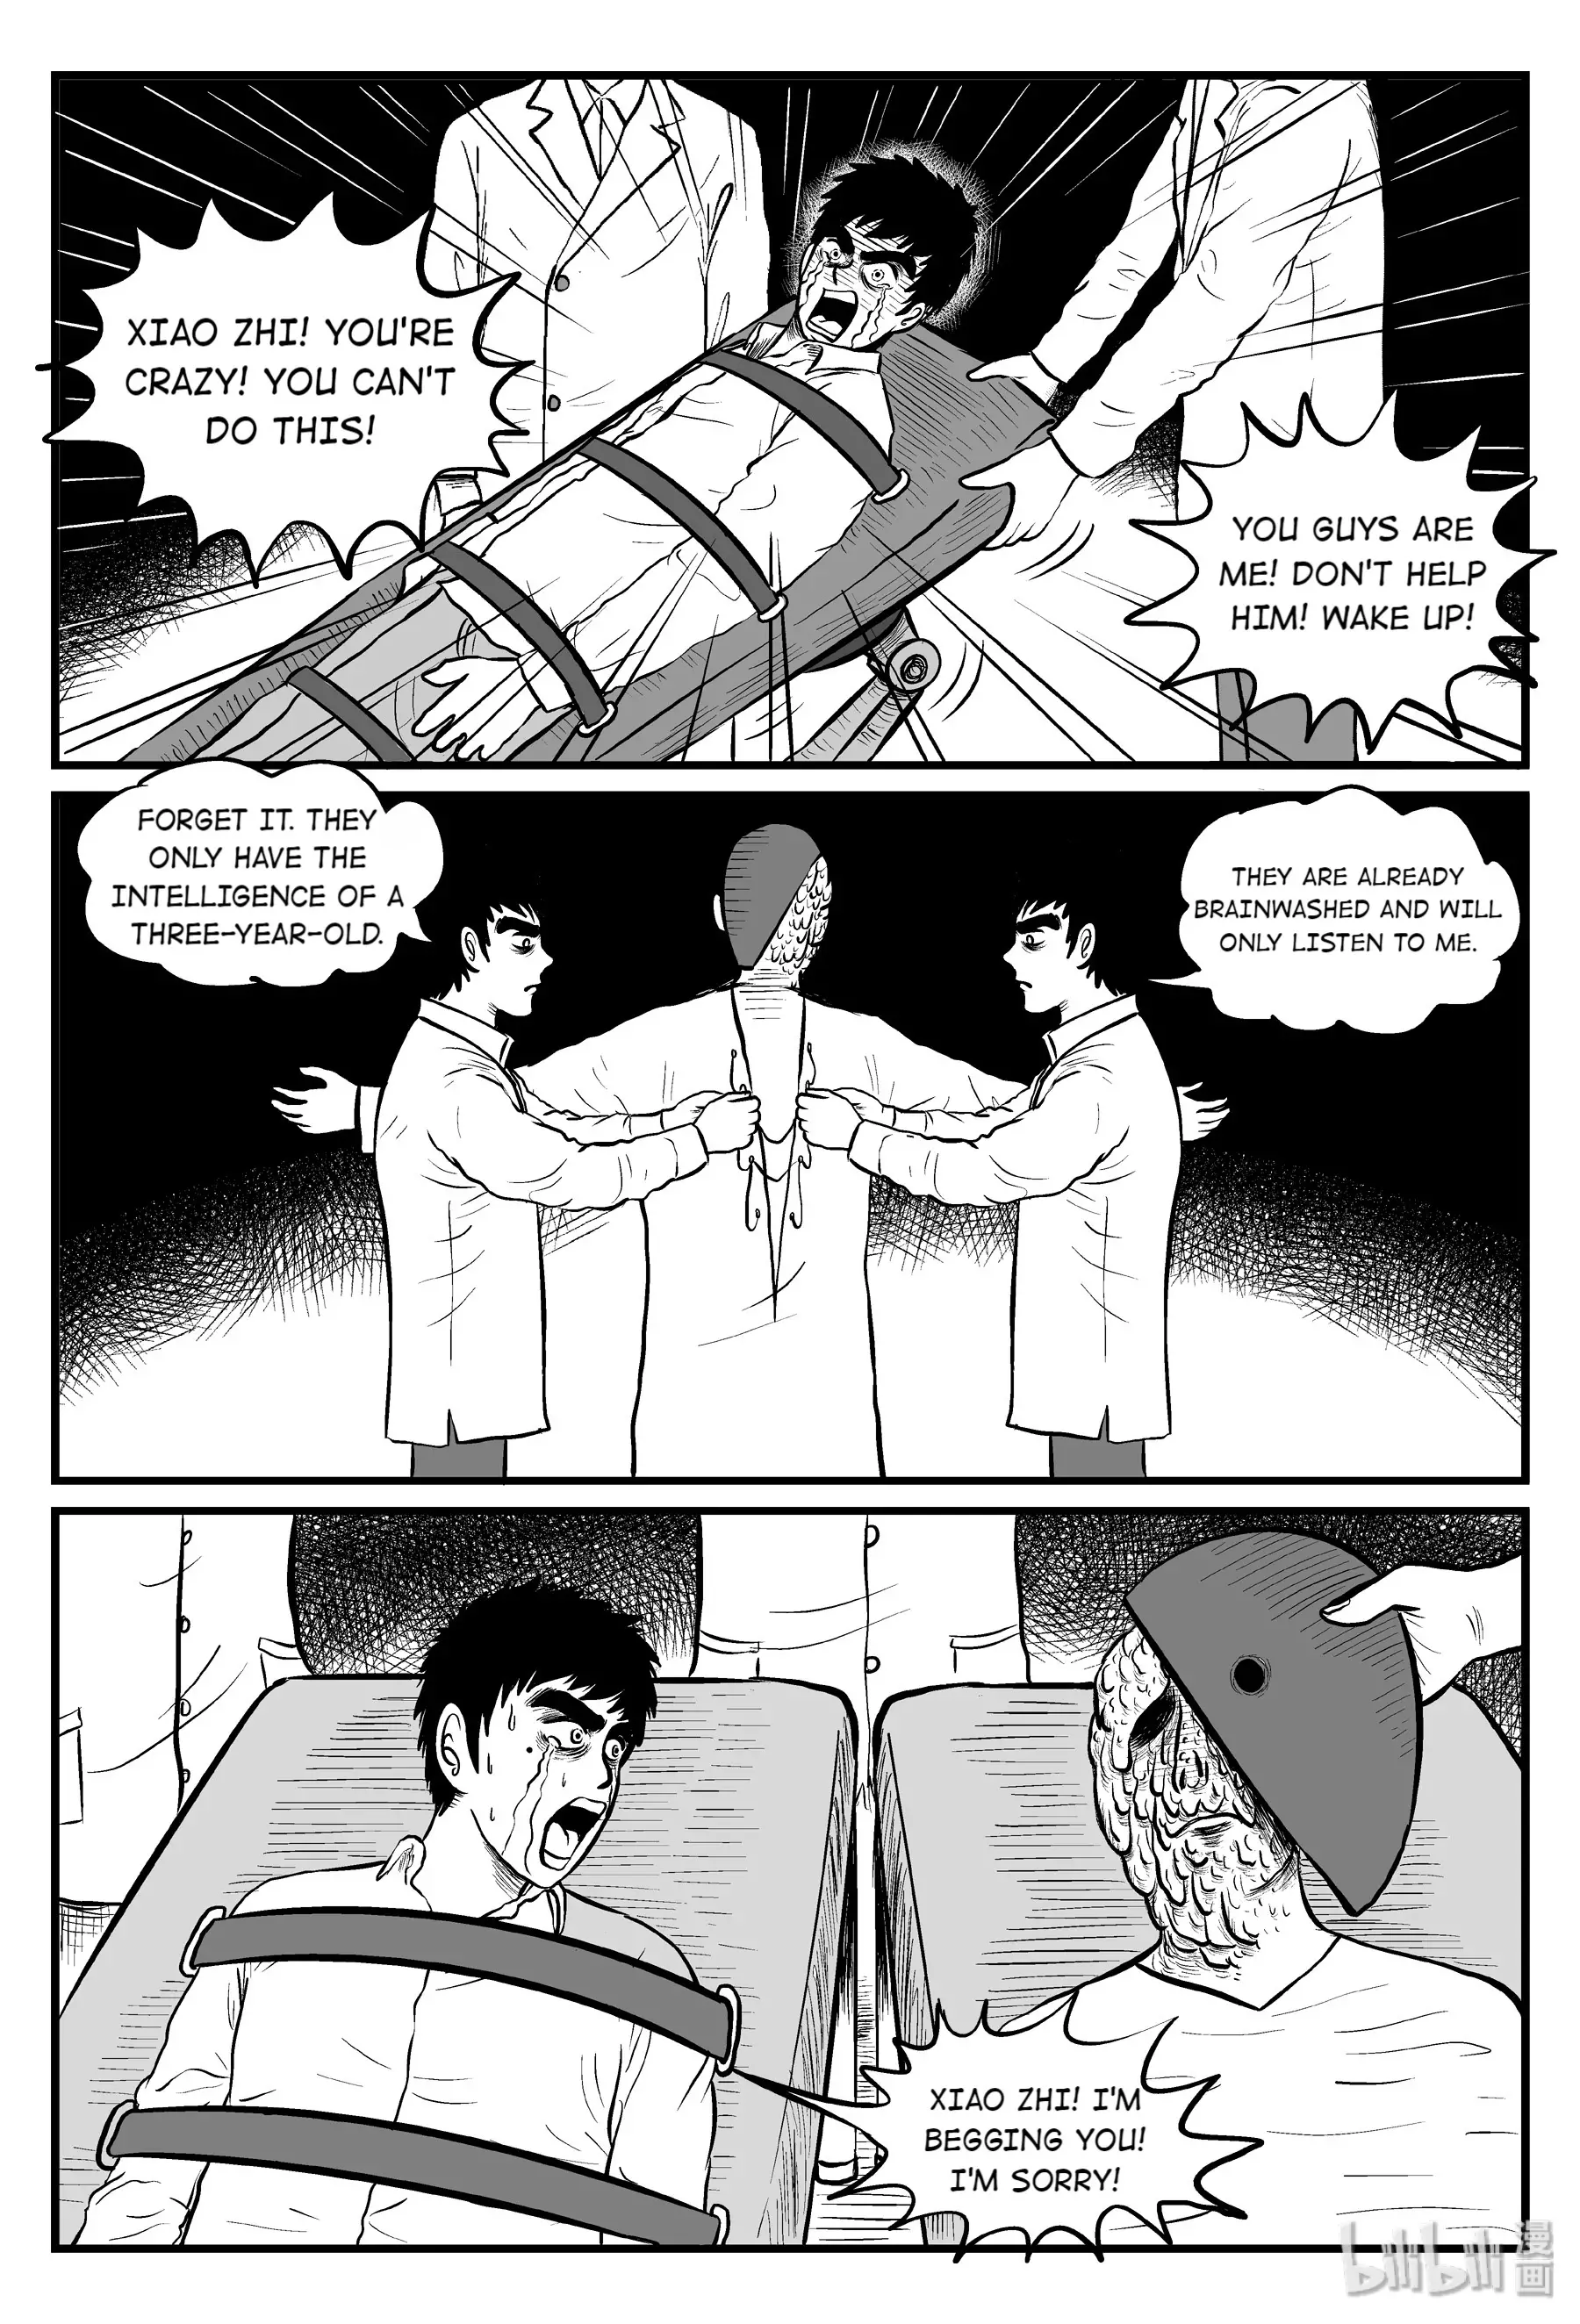 Strange Tales Of Xiao Zhi - 93 page 23-6031e5be